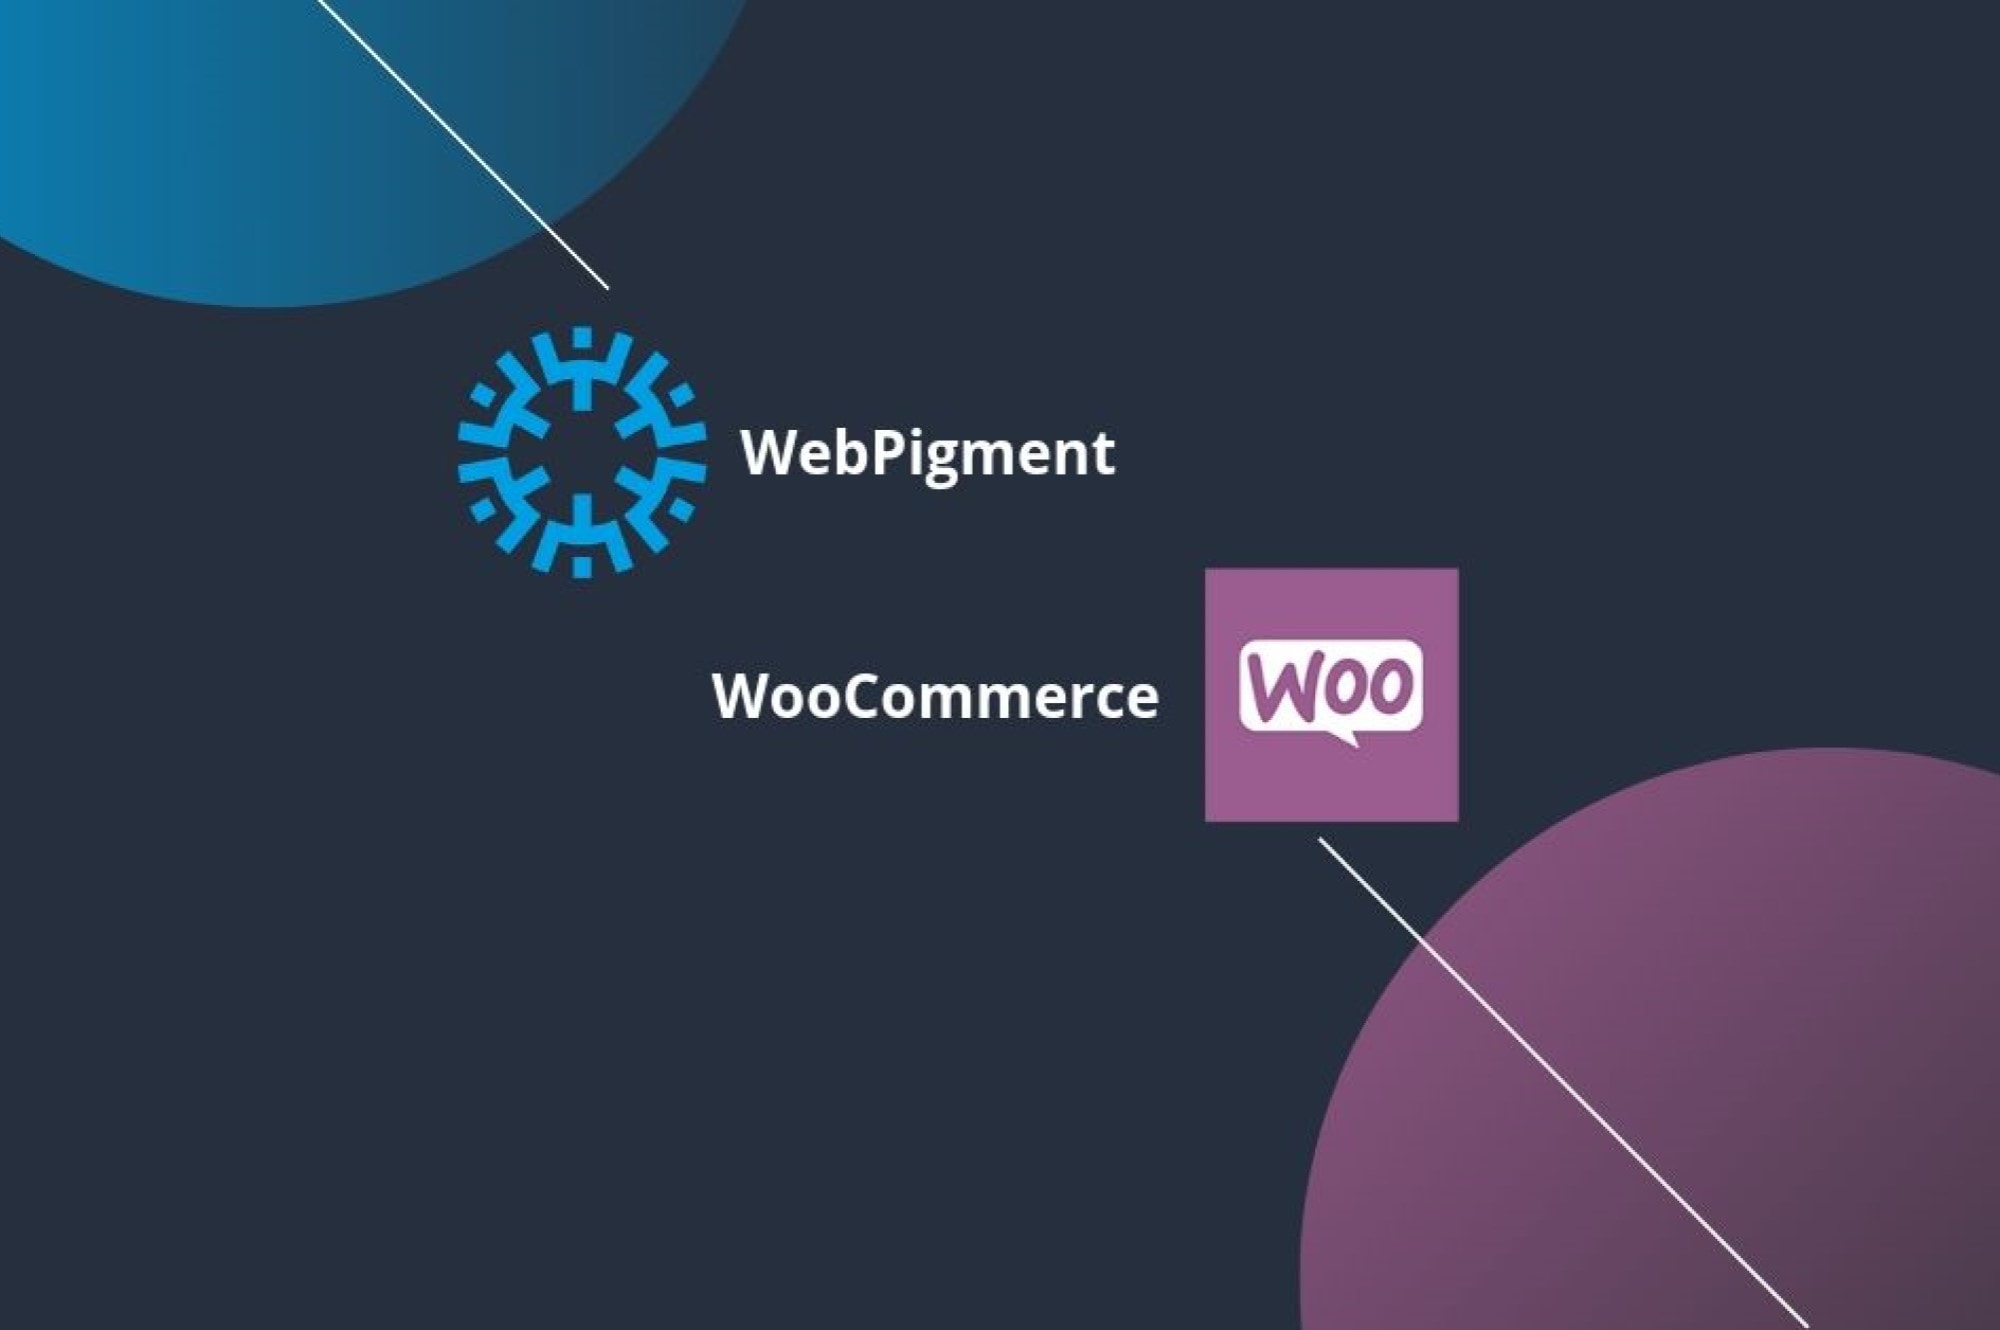 Why Choose WooCommerce?